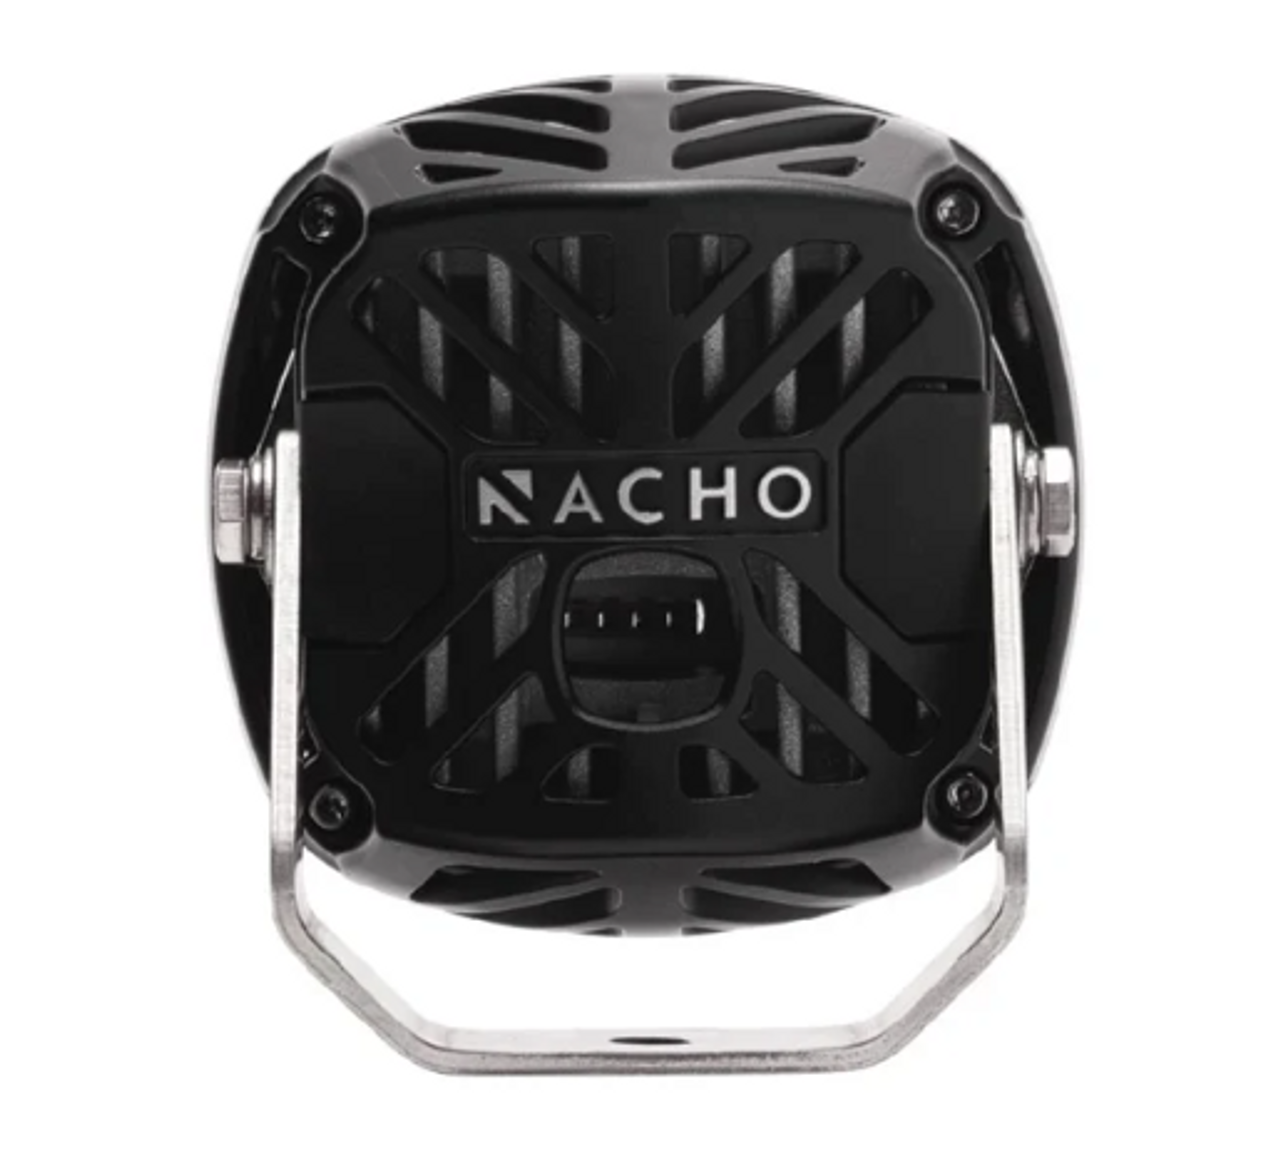 Nacho Offroad Technology PM461 Quatro SAE Combo LED Lights in White